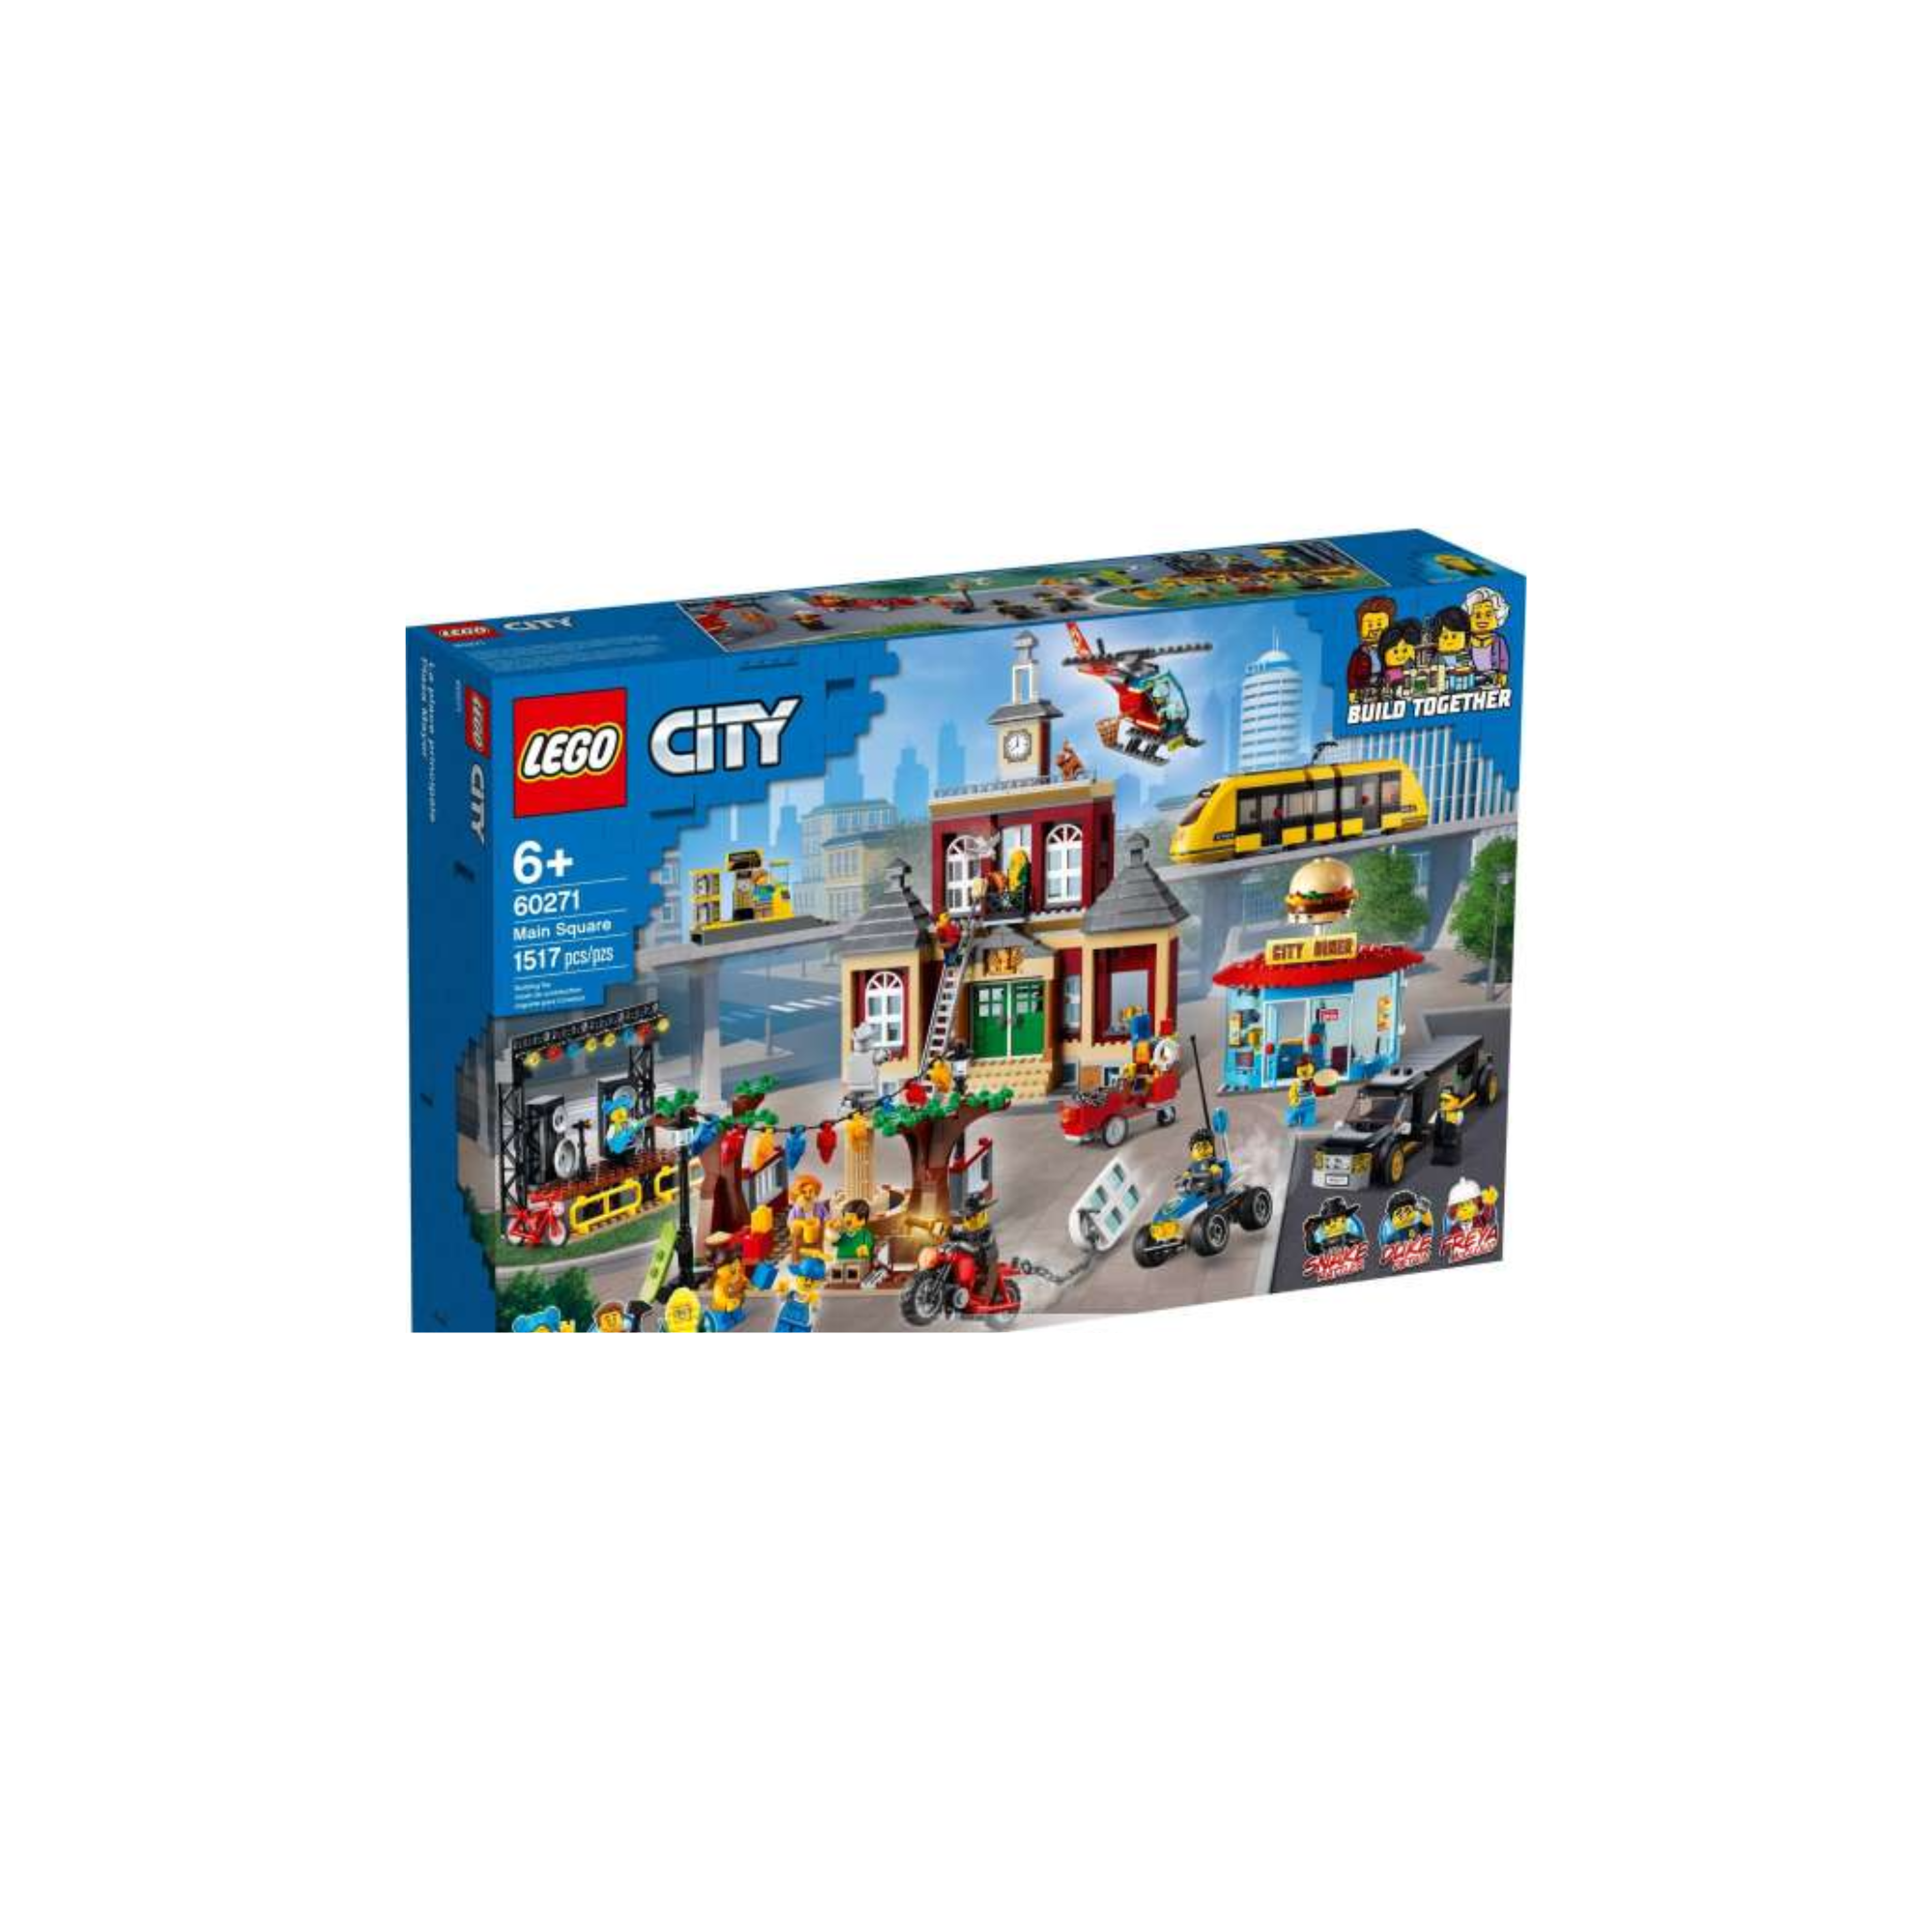 Lego City Main Square